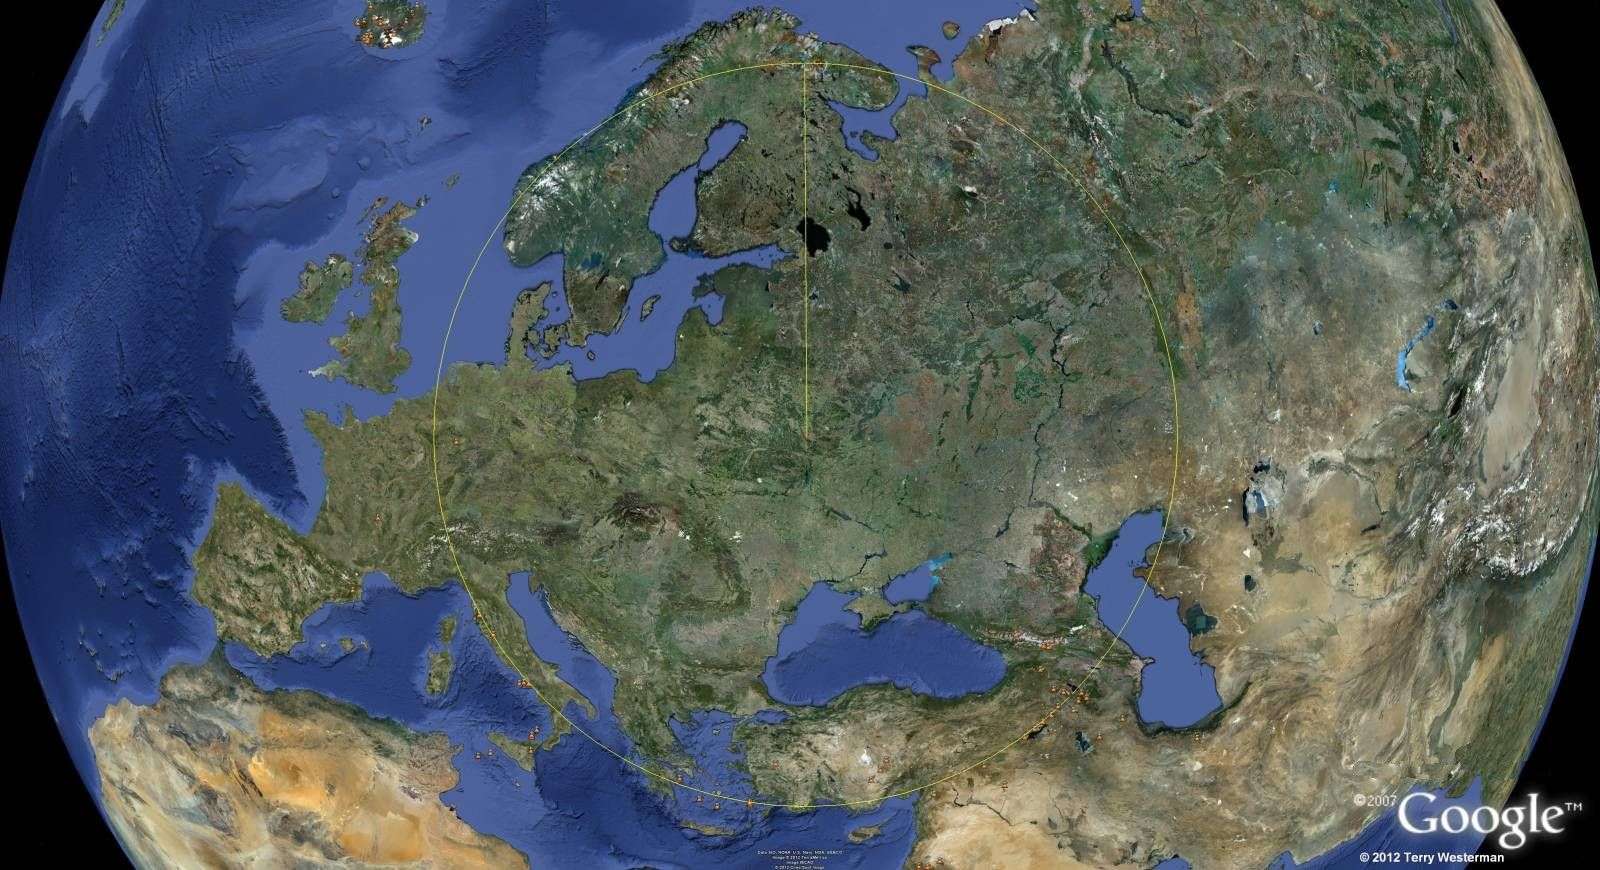 The 1780 km radius seismic circle from the Eurasia Meteor Impact.